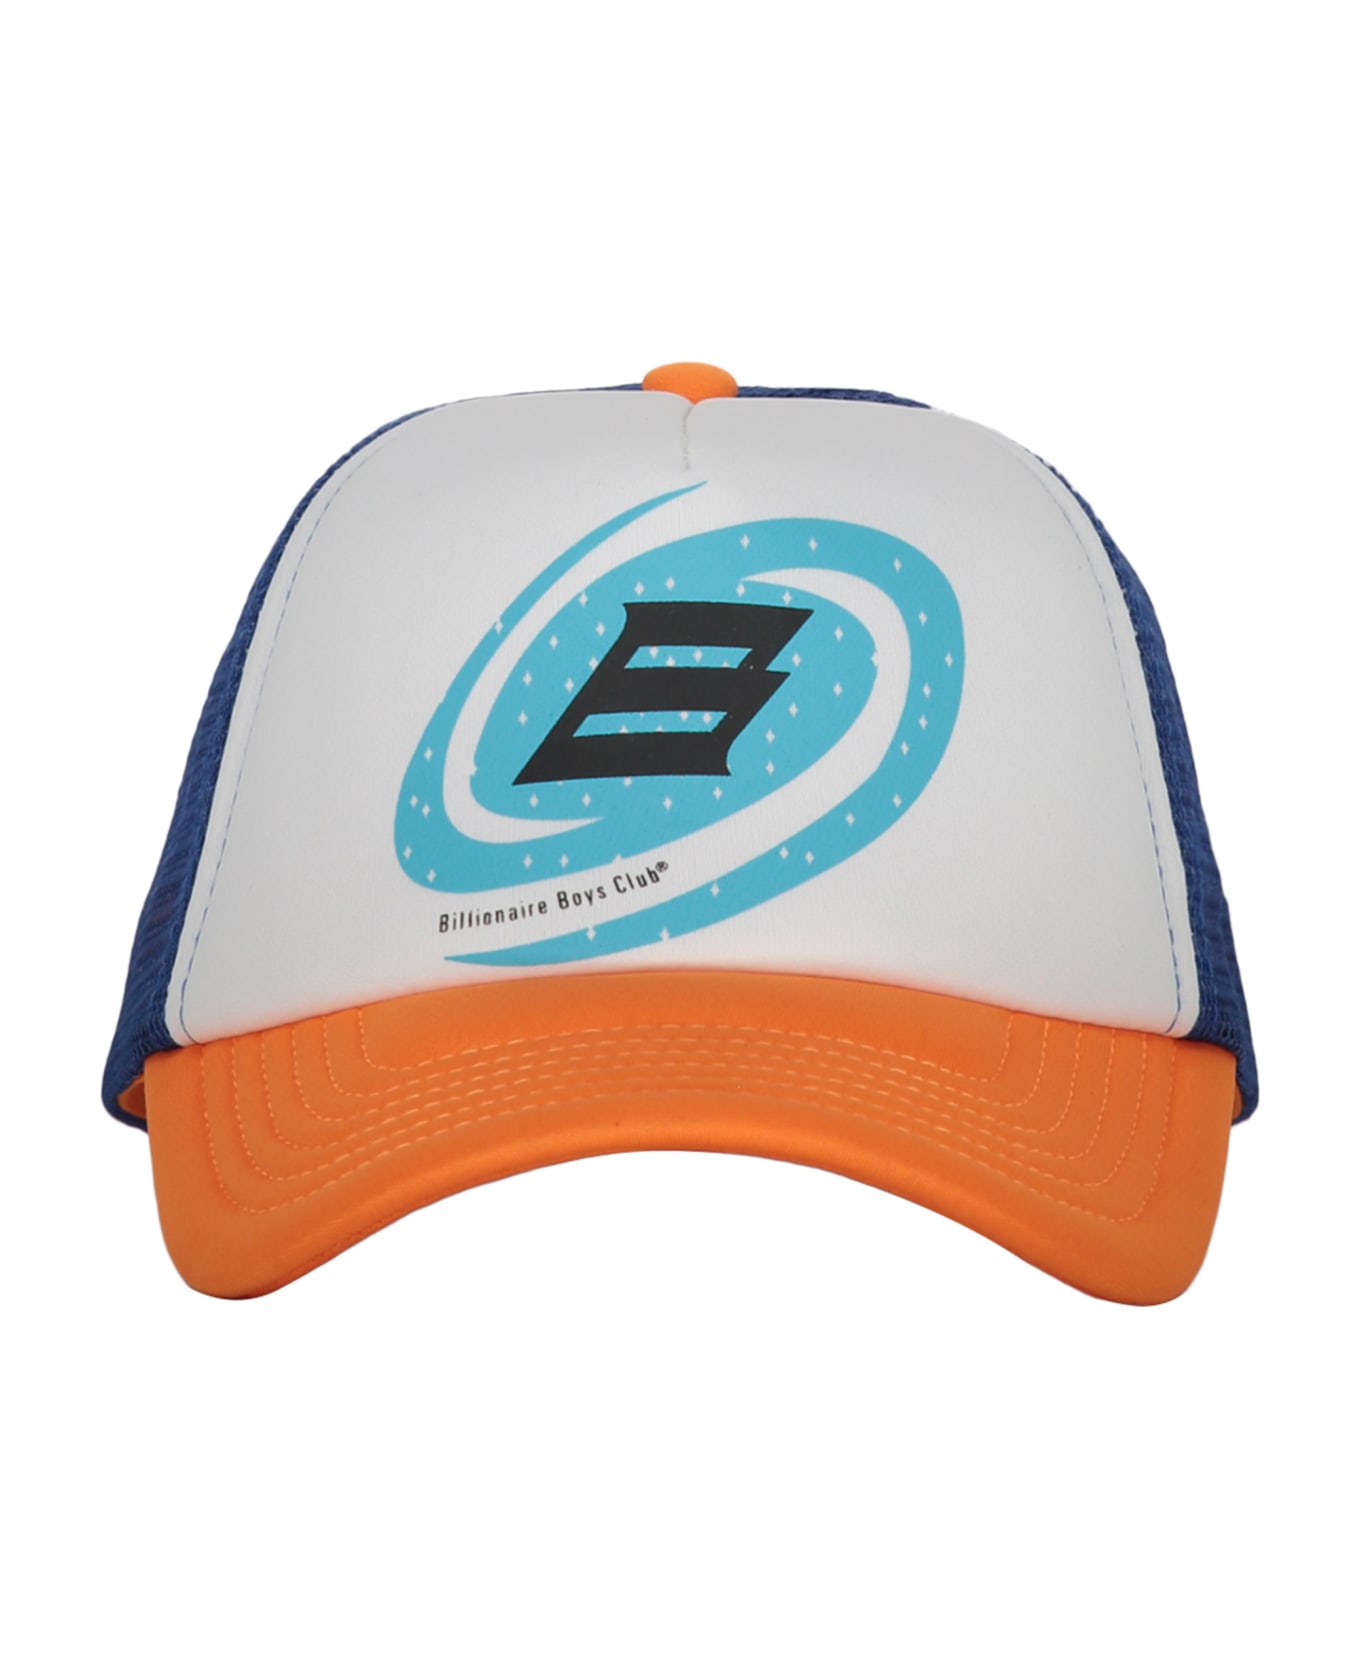 Billionaire Boys Club Baseball Cap - Orange 帽子